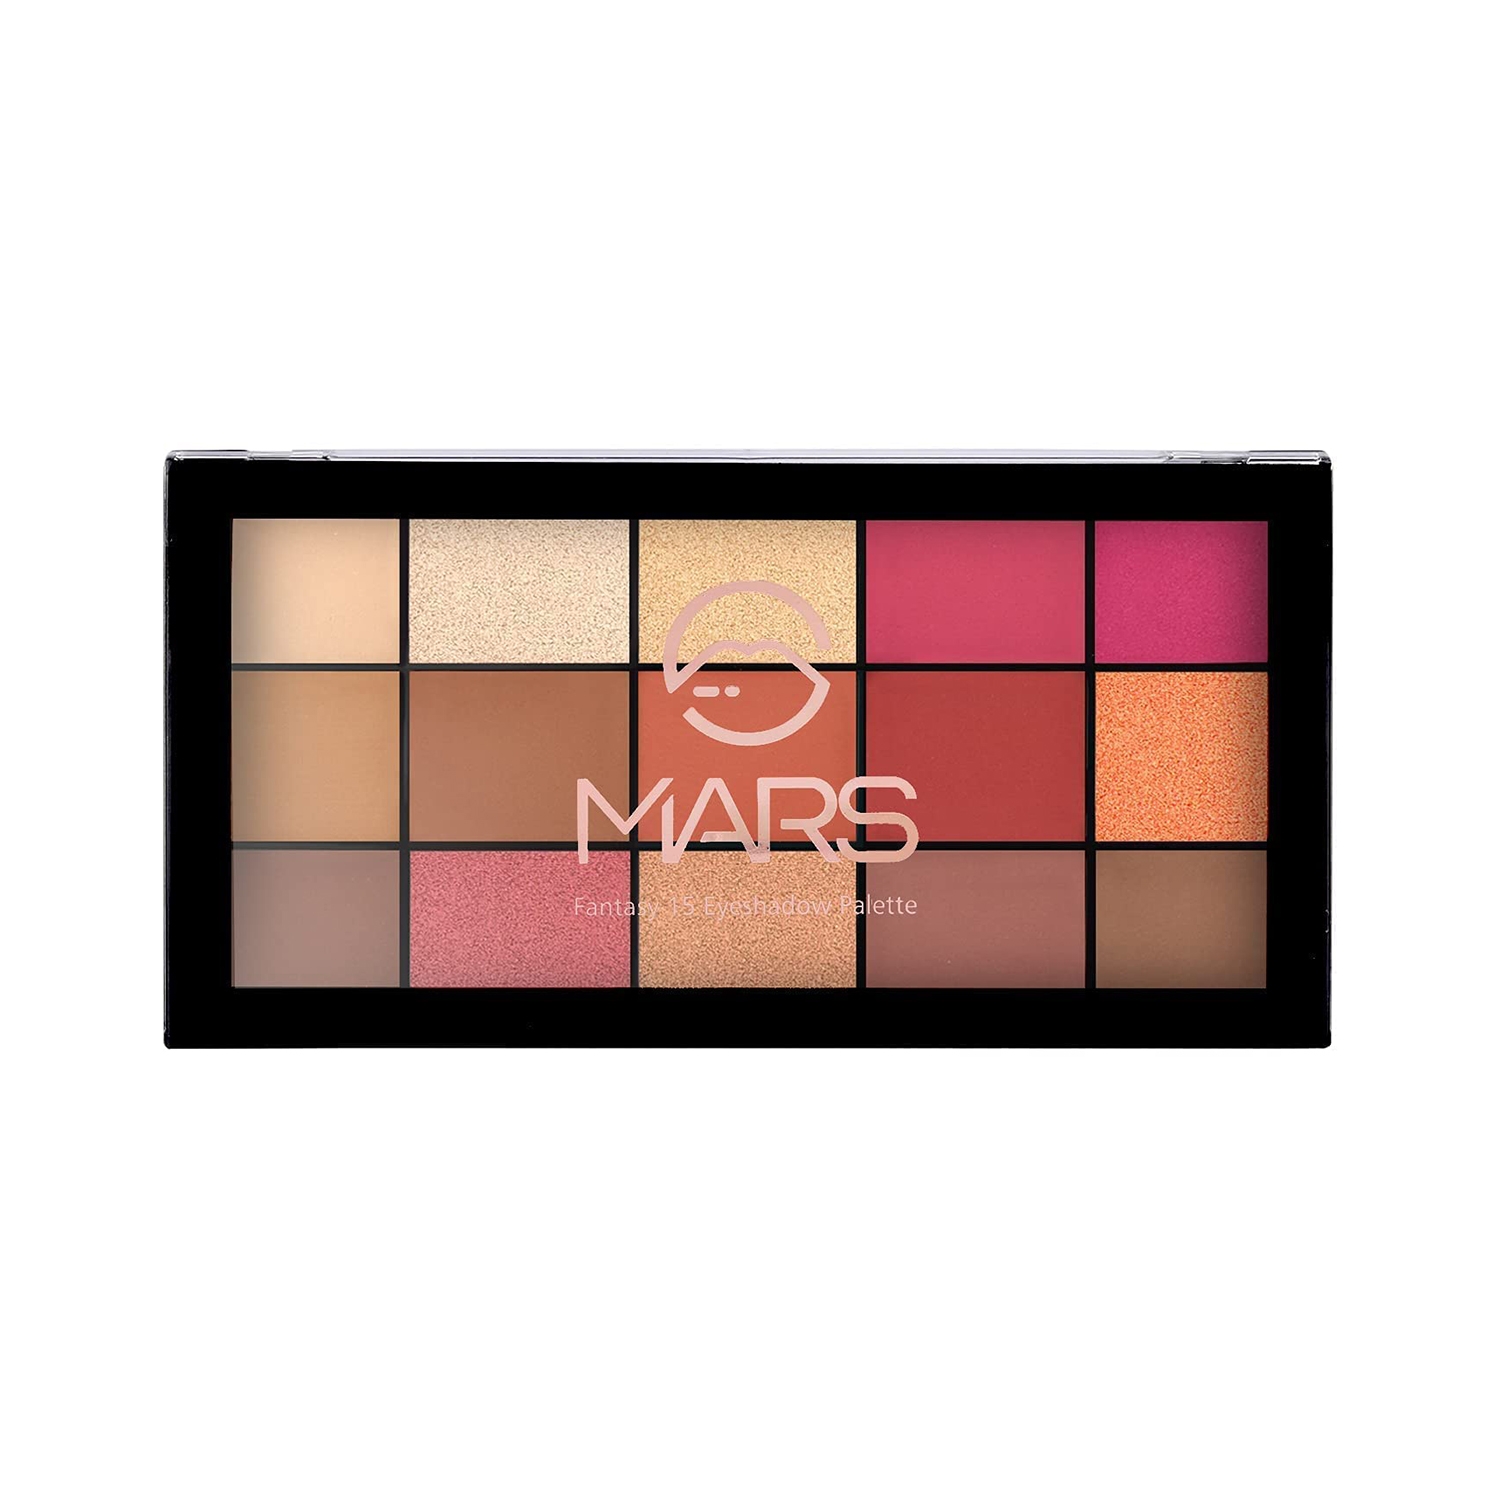 MARS | MARS Fantasy 15 Eyeshadow Palette - 2 (22.5 g)